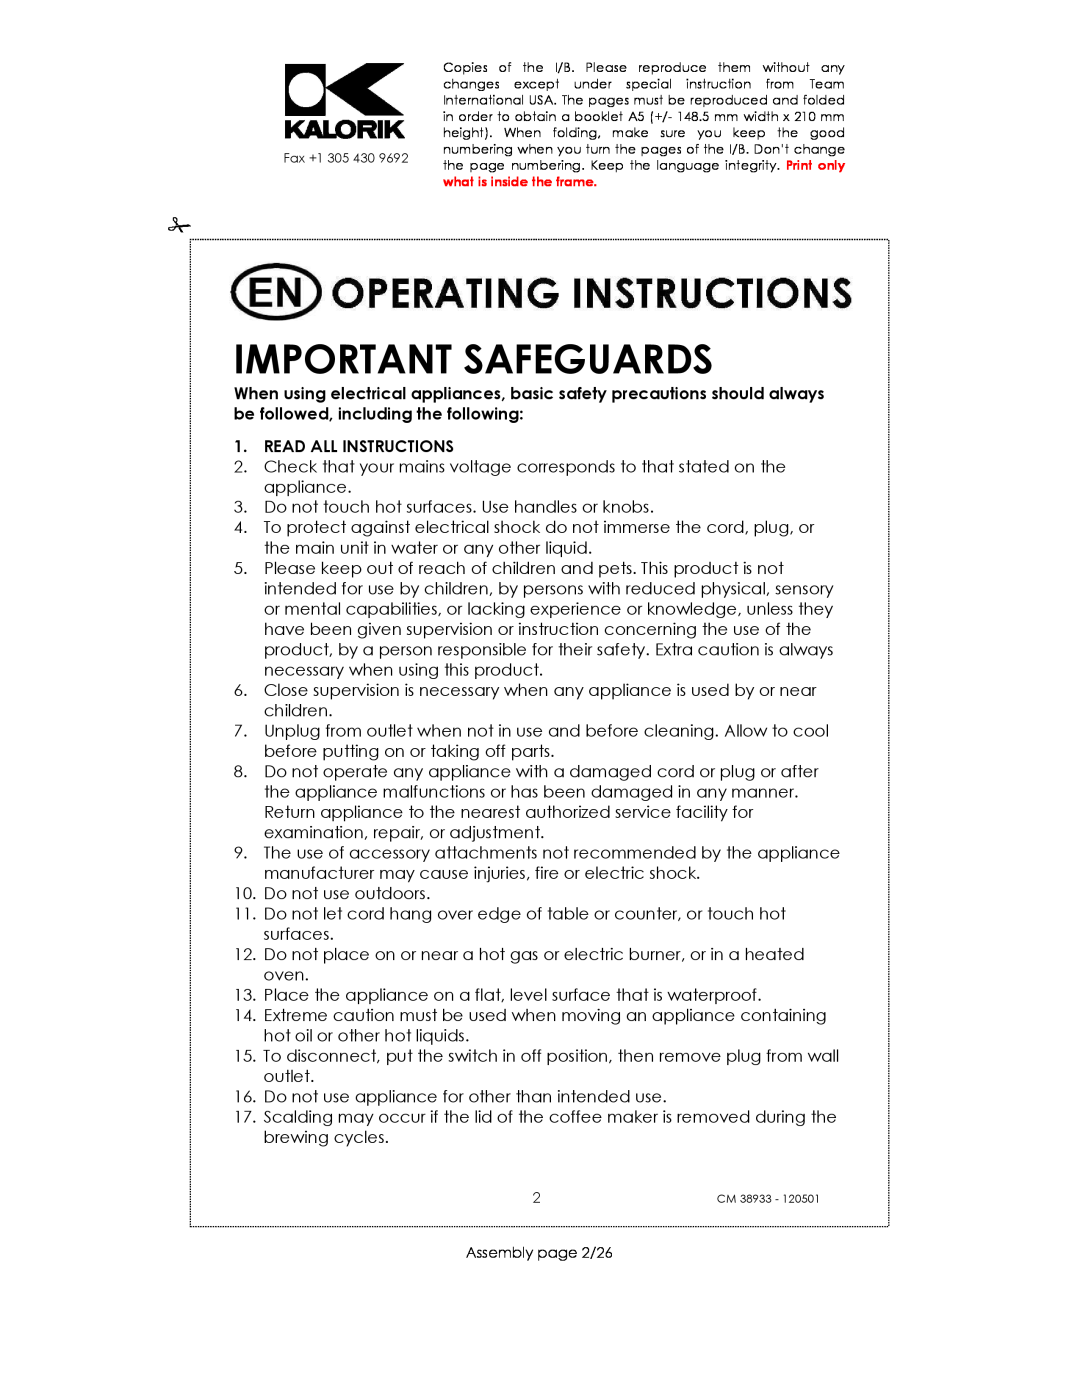 Kalorik CM 38933 manual Important Safeguards, Read All Instructions 